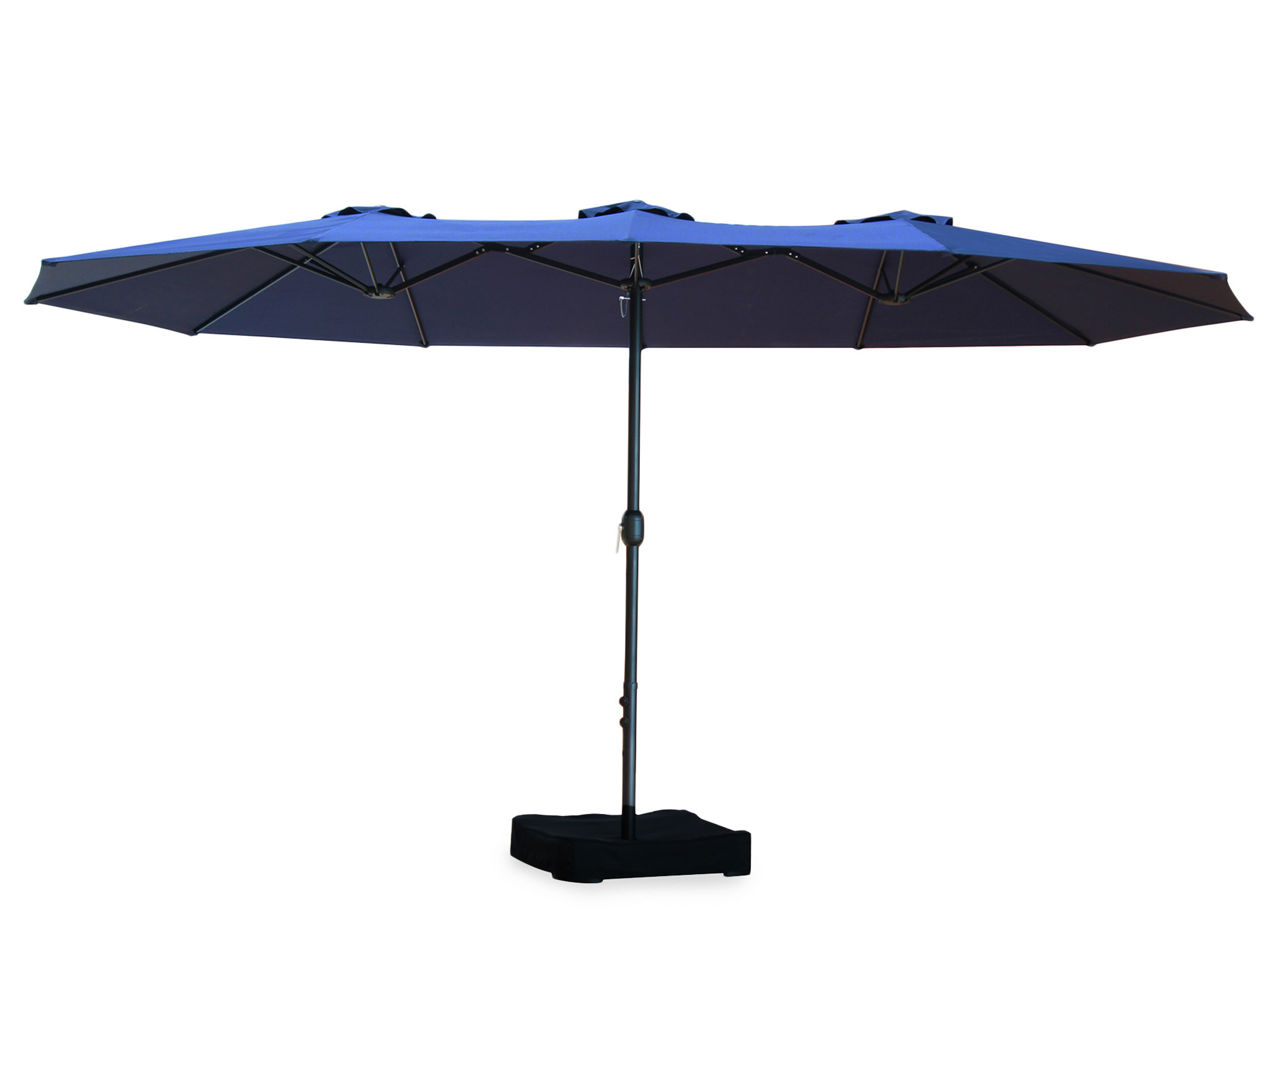 15' Navy Blue Triple Vent Market Patio Umbrella with Base